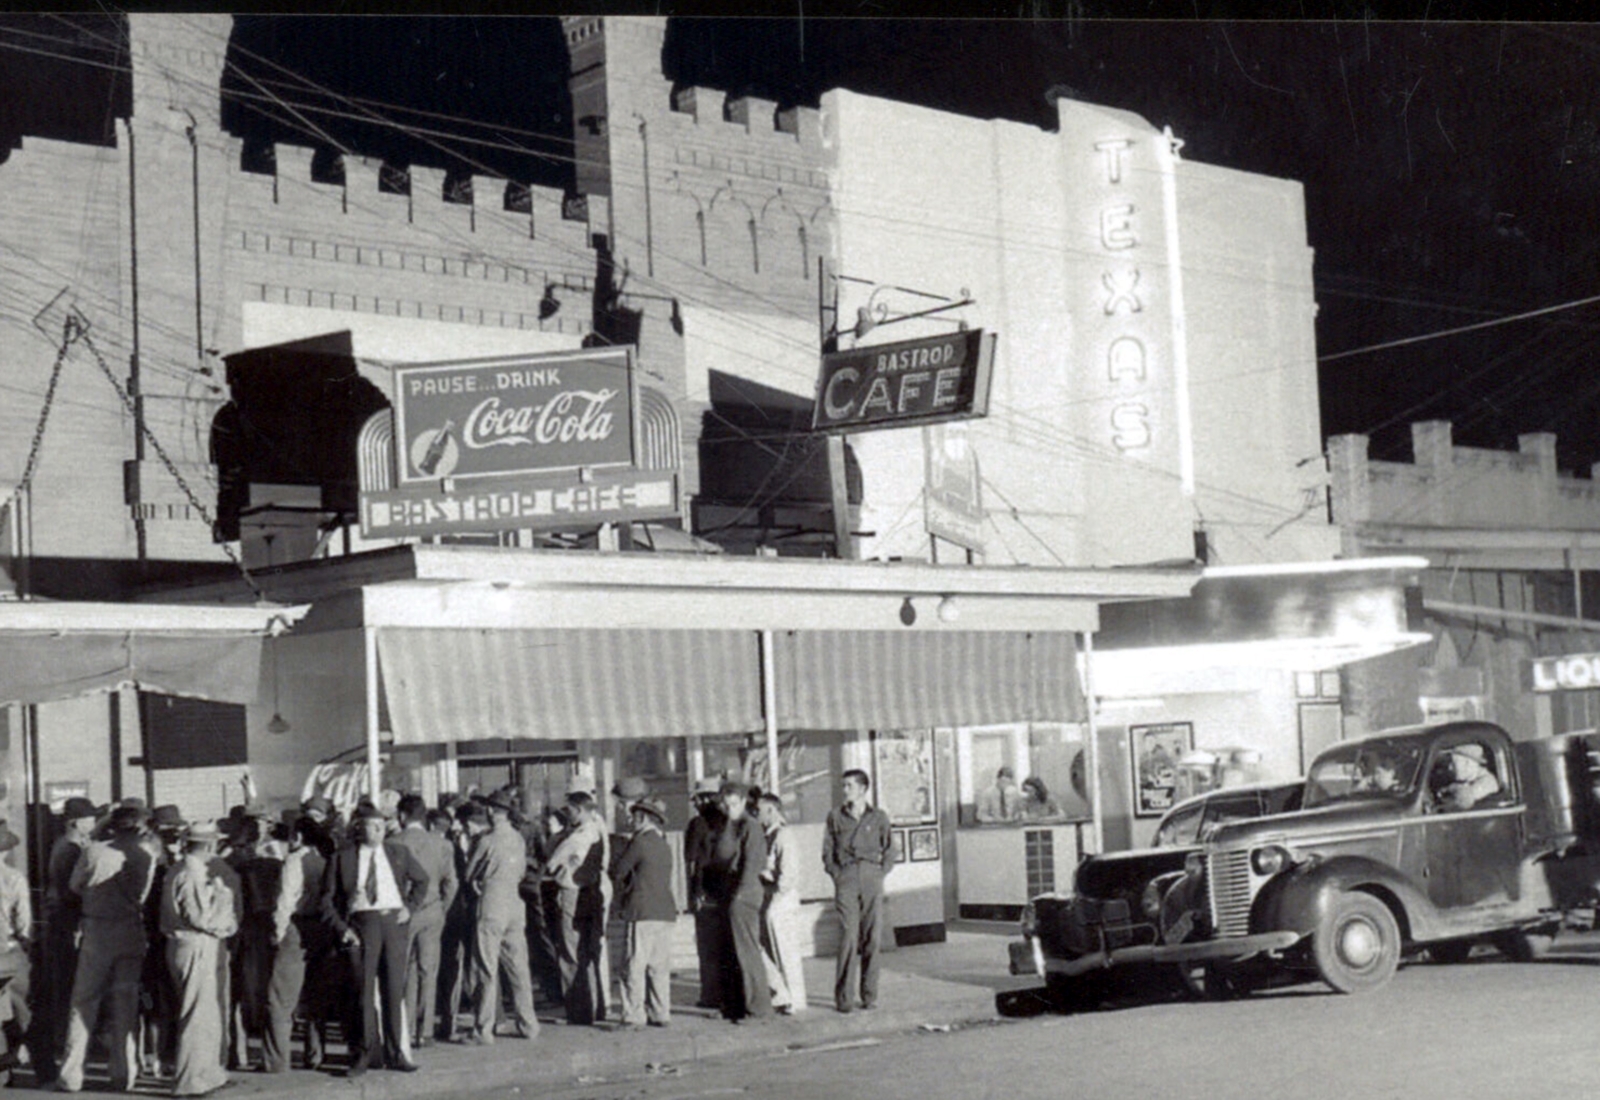 Bastrop Cafe in 1940s